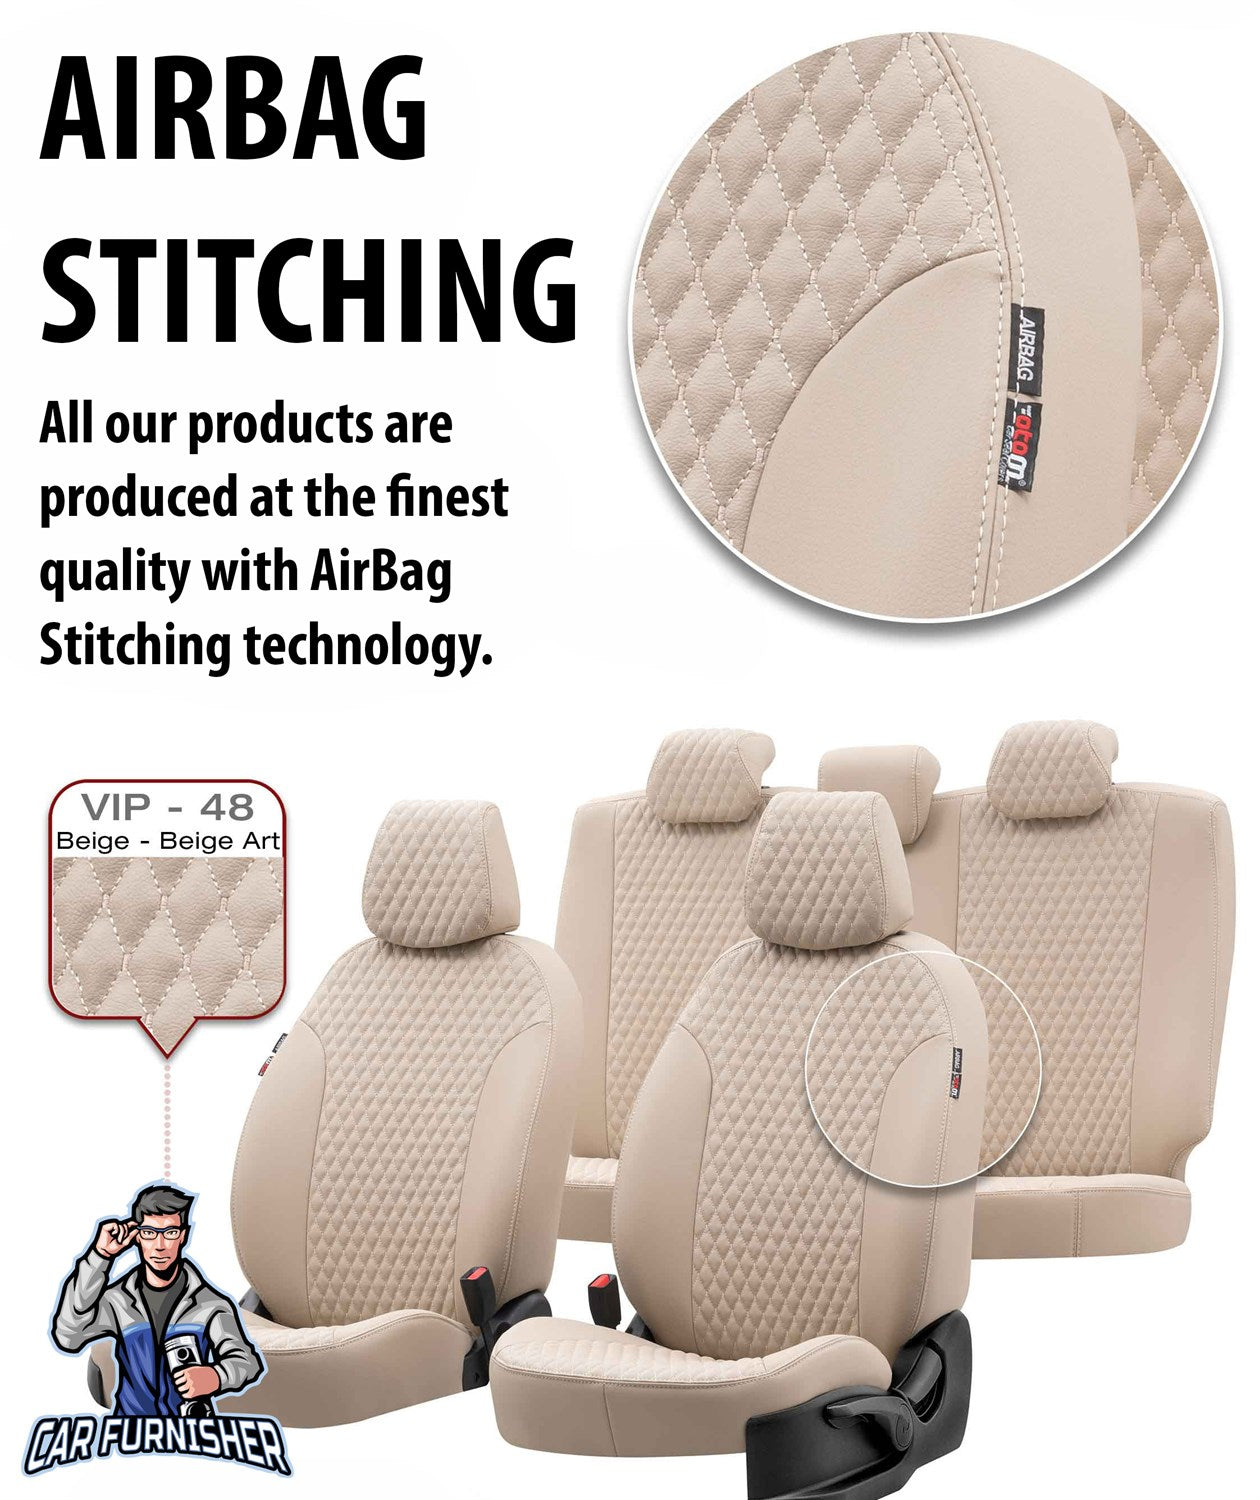 Daihatsu Materia Seat Covers Amsterdam Leather Design Smoked Black Leather